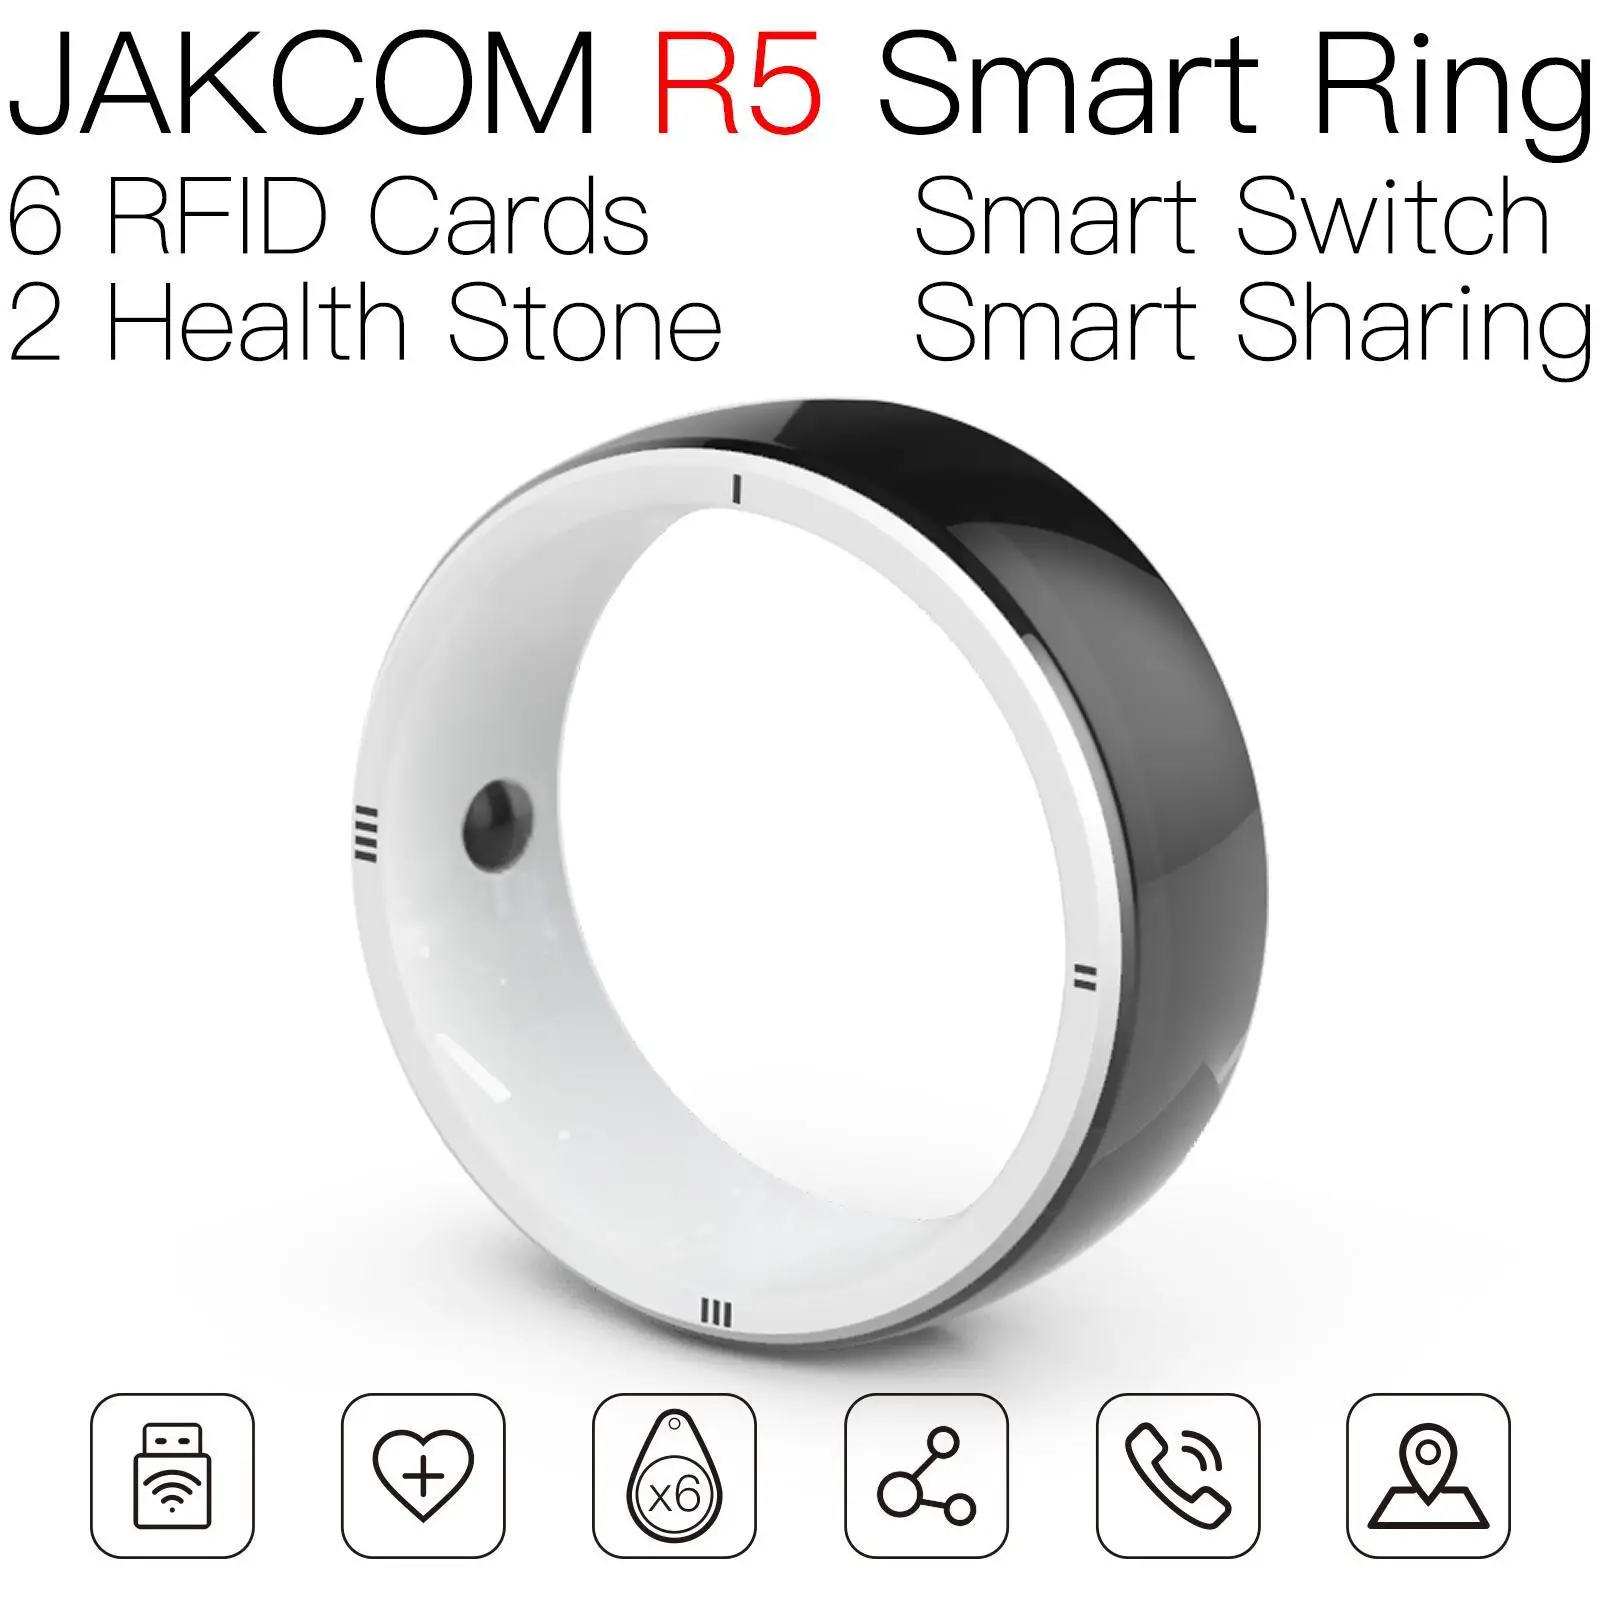 

JAKCOM R5 Smart Ring Super value as annimal crossing new horizon carte amibo rfid tag scanner rfc chip duplicator hacking card